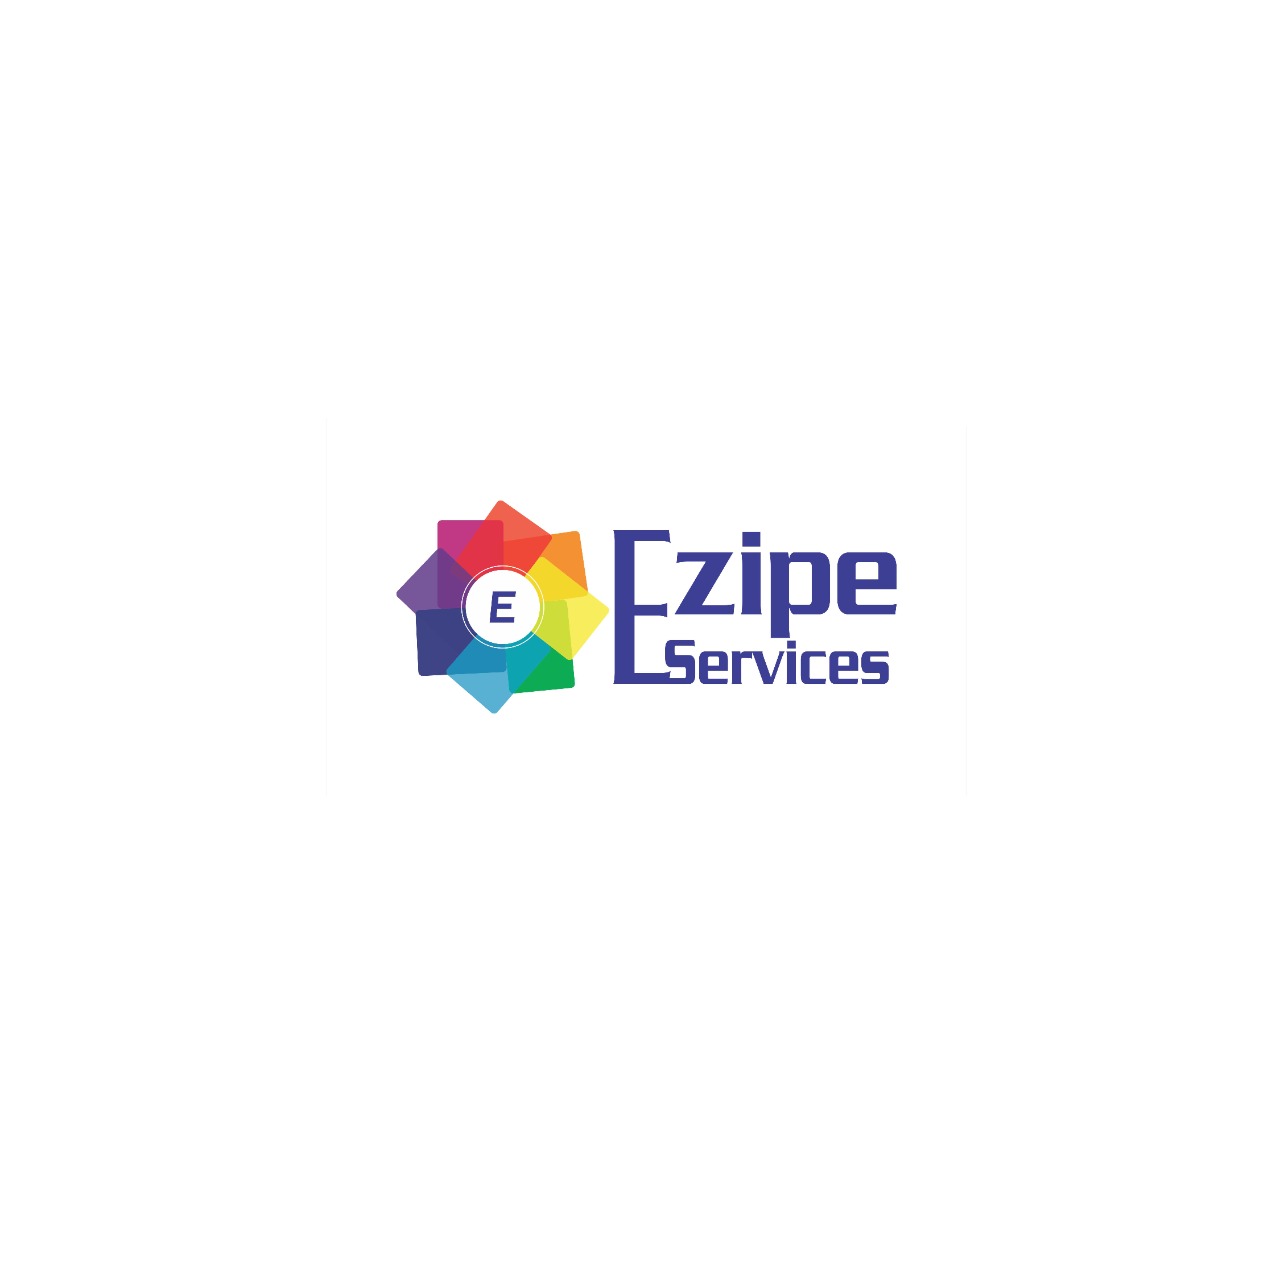 Ezipe Services